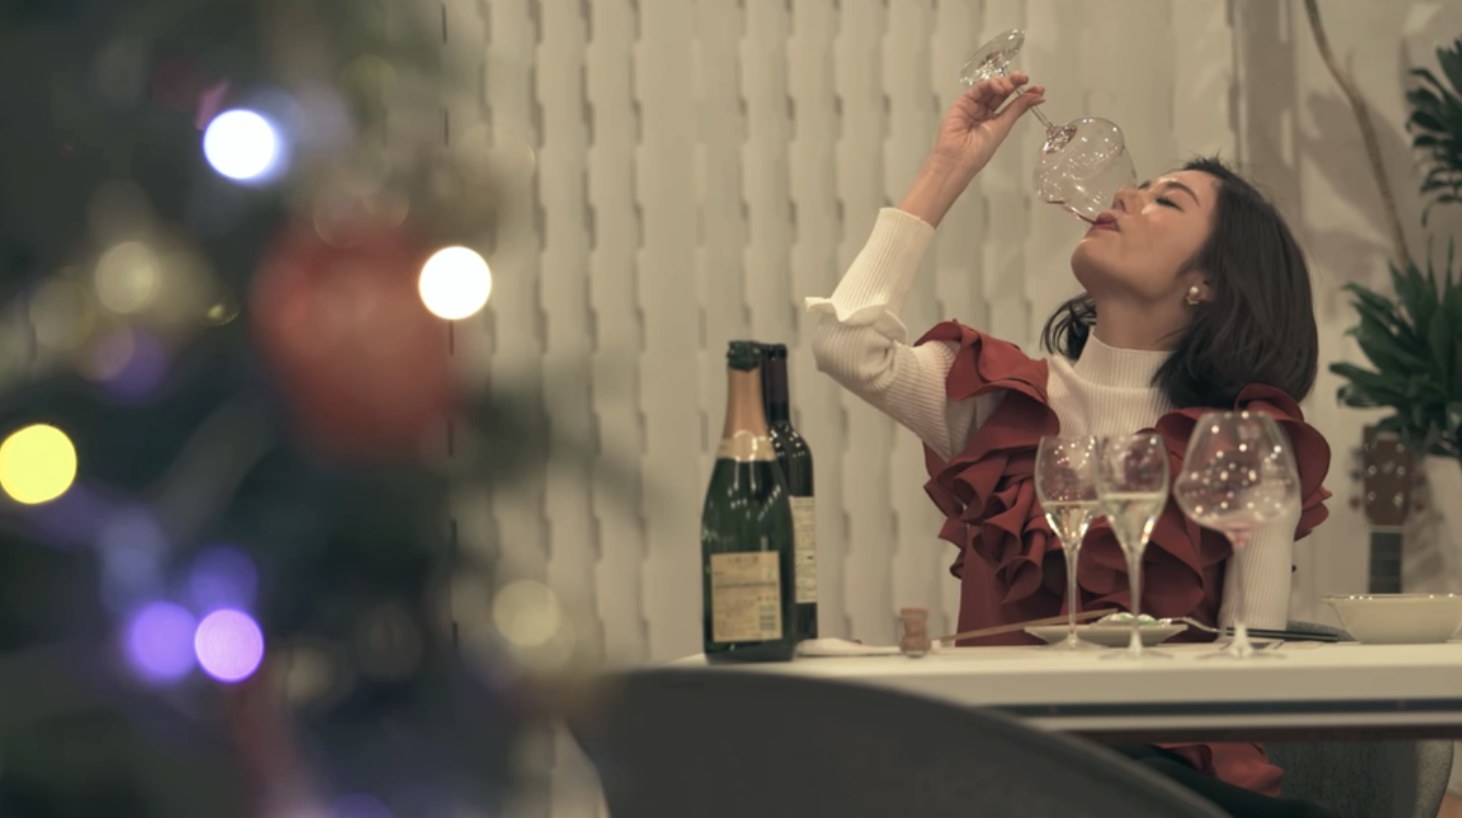 Seina drinking a glass of wine alone.